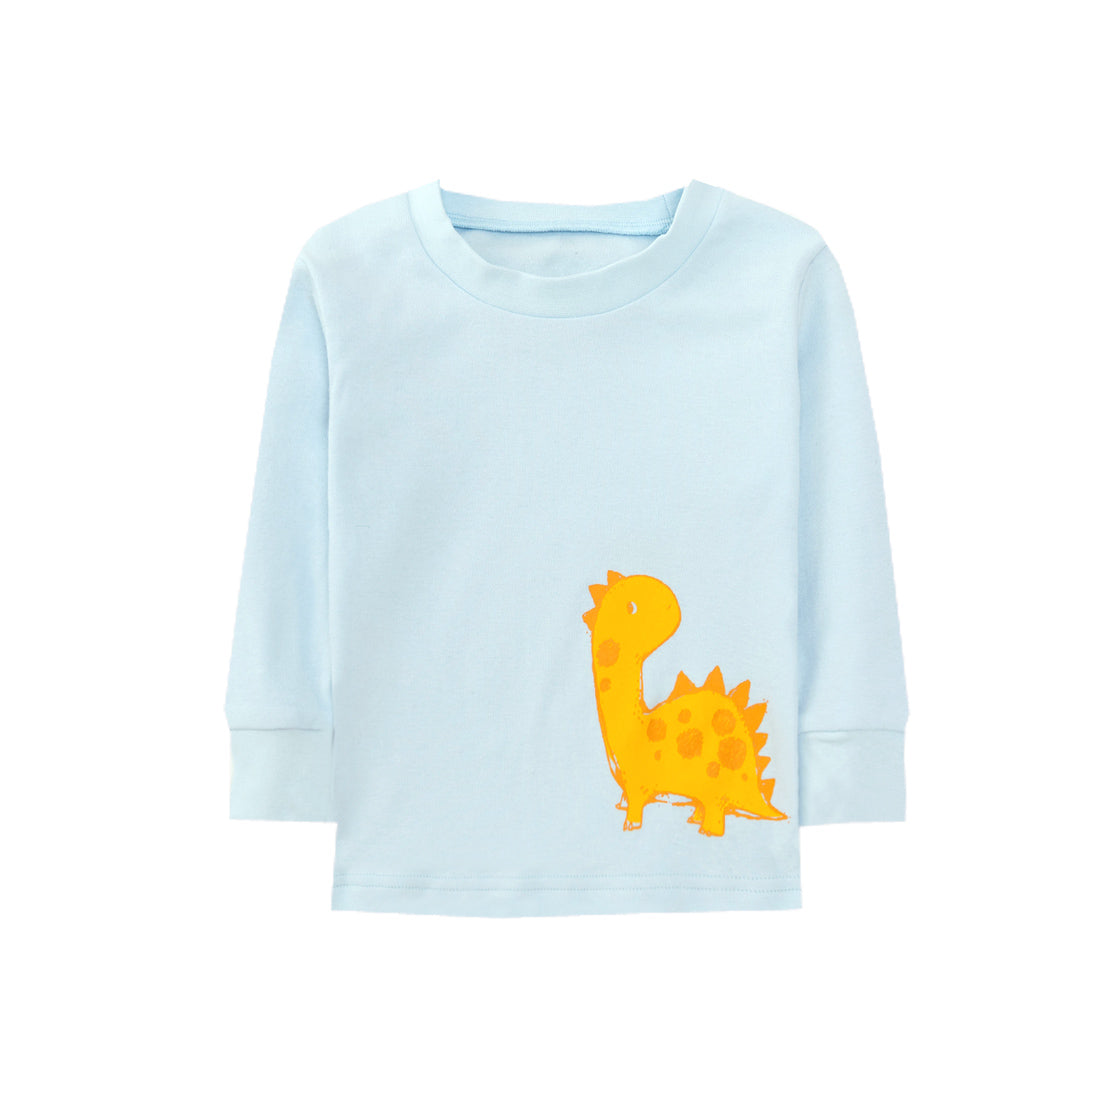 Baby Kids Pajamas Dinosaur Blue Top n Dinosaur Pants Set - Little Kooma